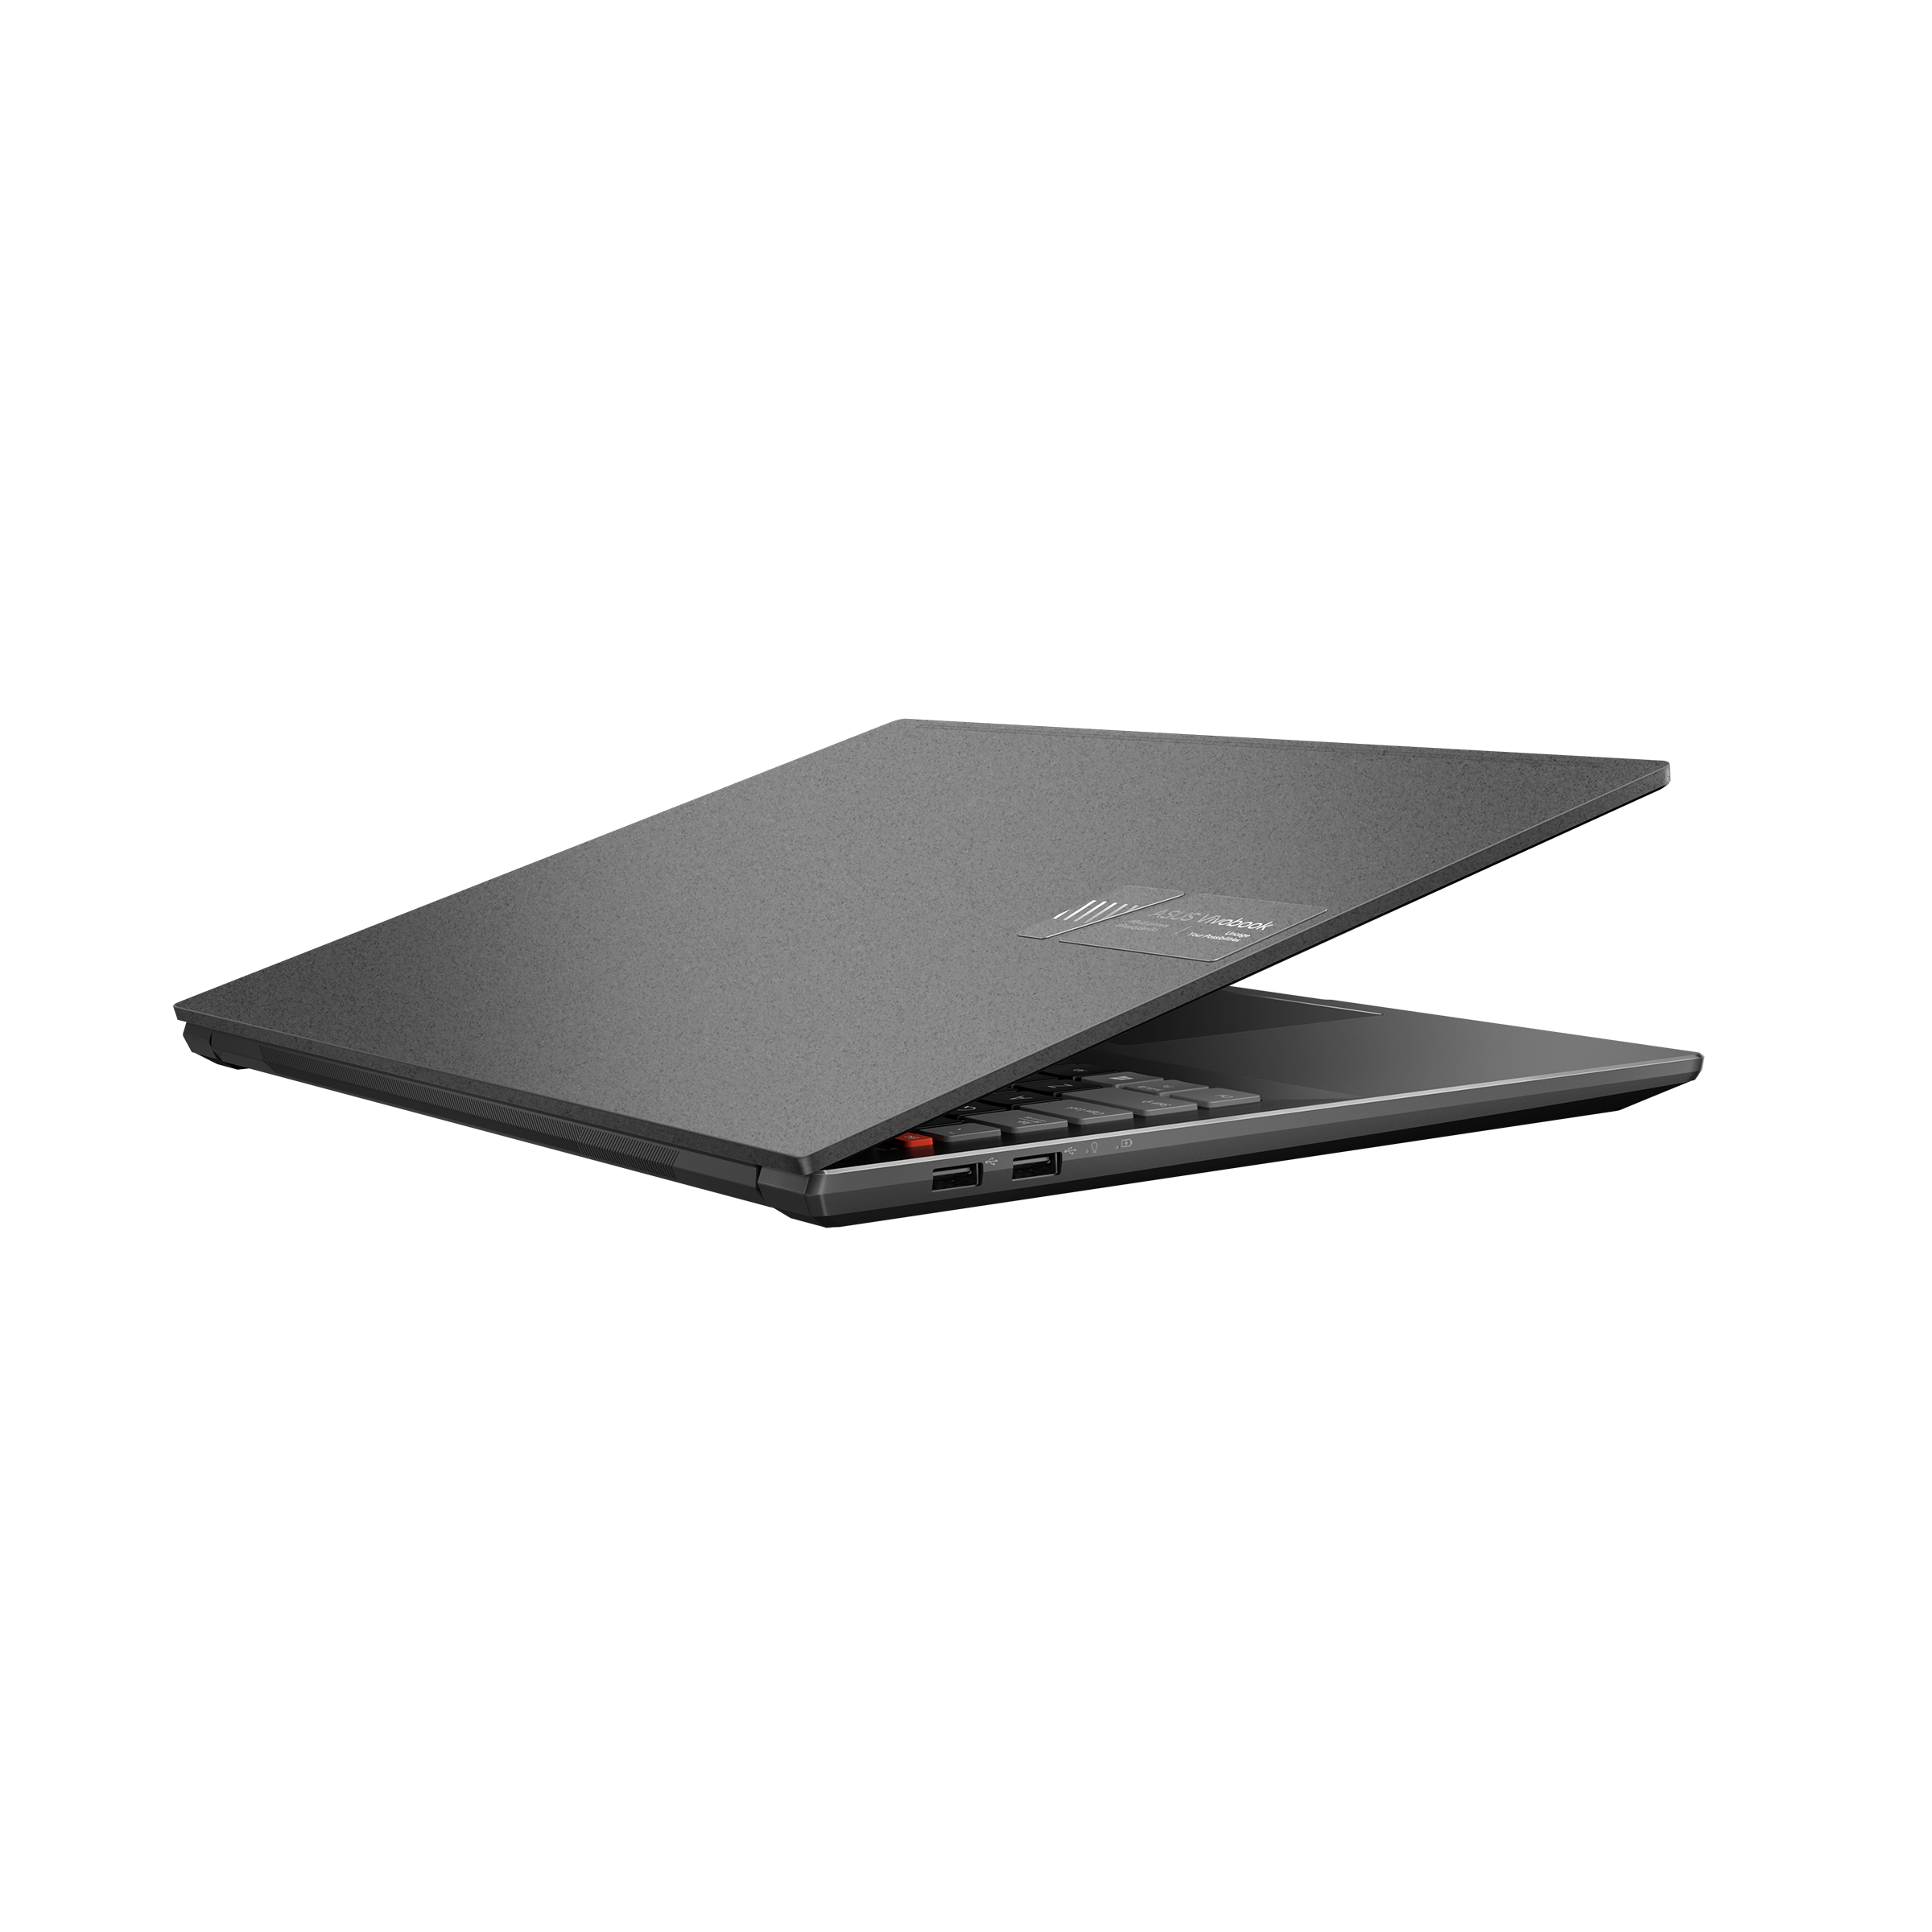 Vivobook Pro 16X OLED (N7600, 11th Gen Intel)